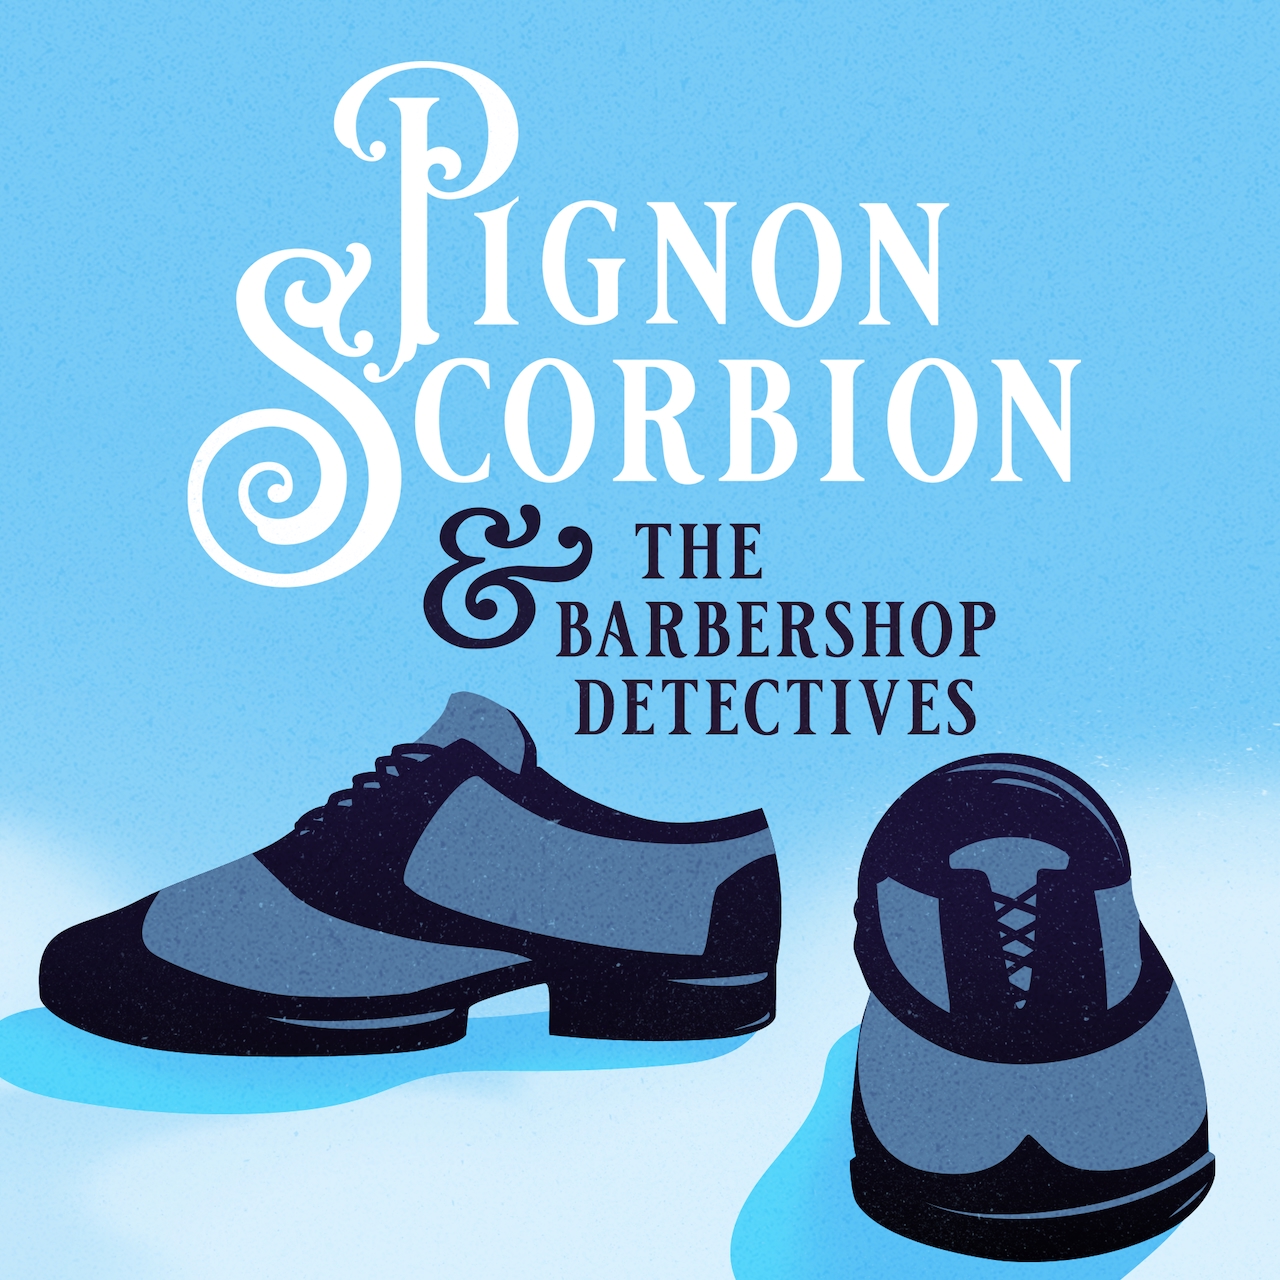 Pignon Scorbion & The Barbershop Detectives (Blackstone Publishing, Feb 8, 2022) features the new Police Chief Inspector Pignon Scorbion, who is a friend of Dr. John Watson (Sherlock Holmes).